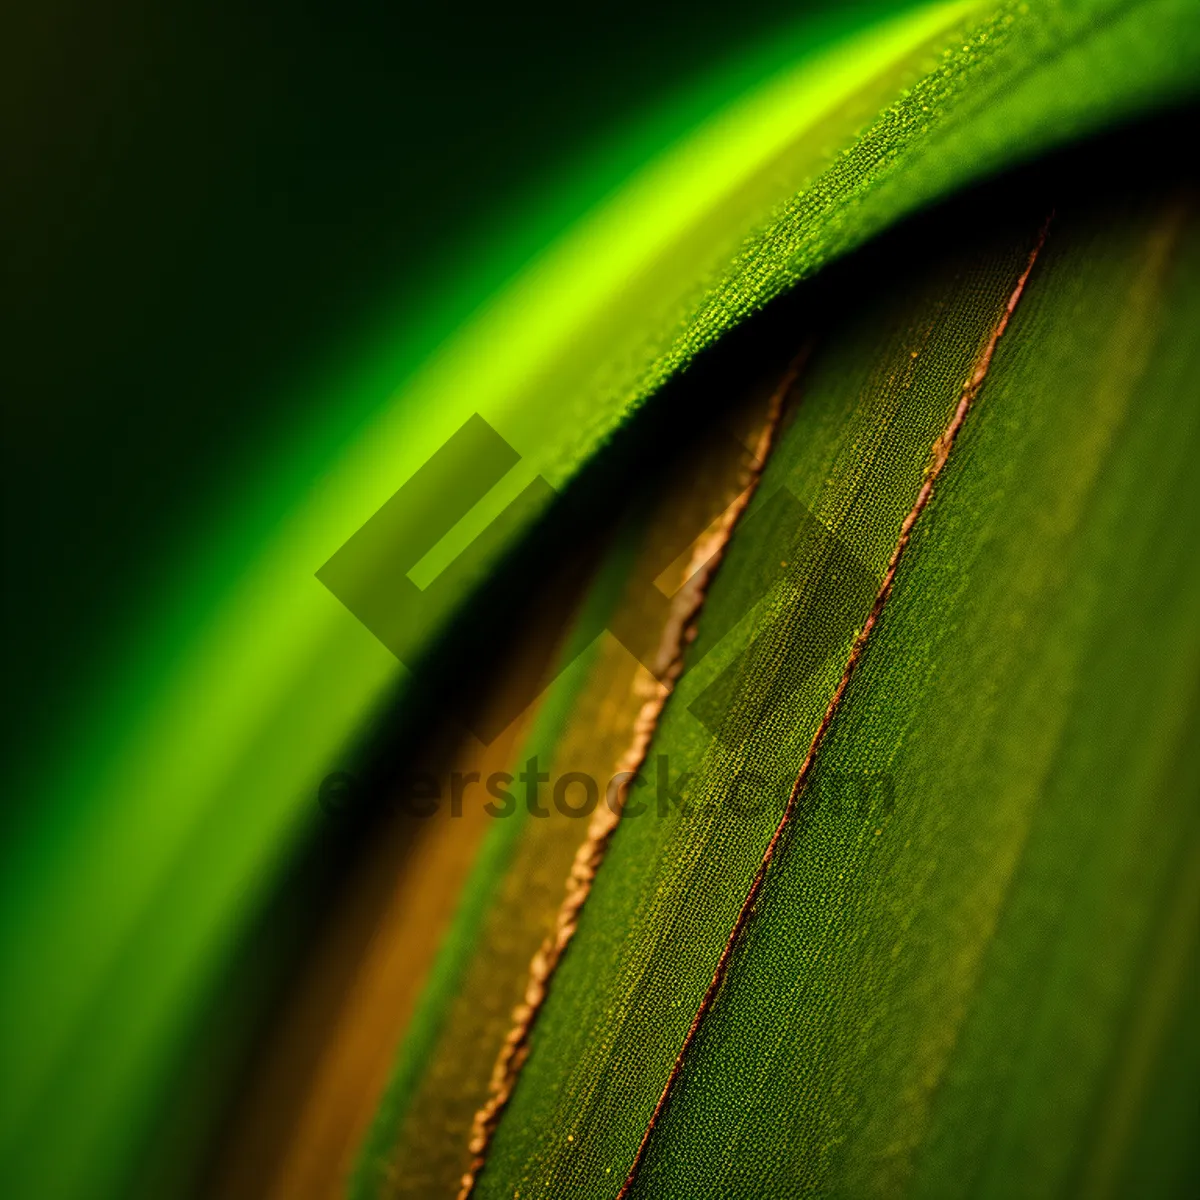 Picture of Vibrant Agave Leaf: Desert-inspired Fractal Art